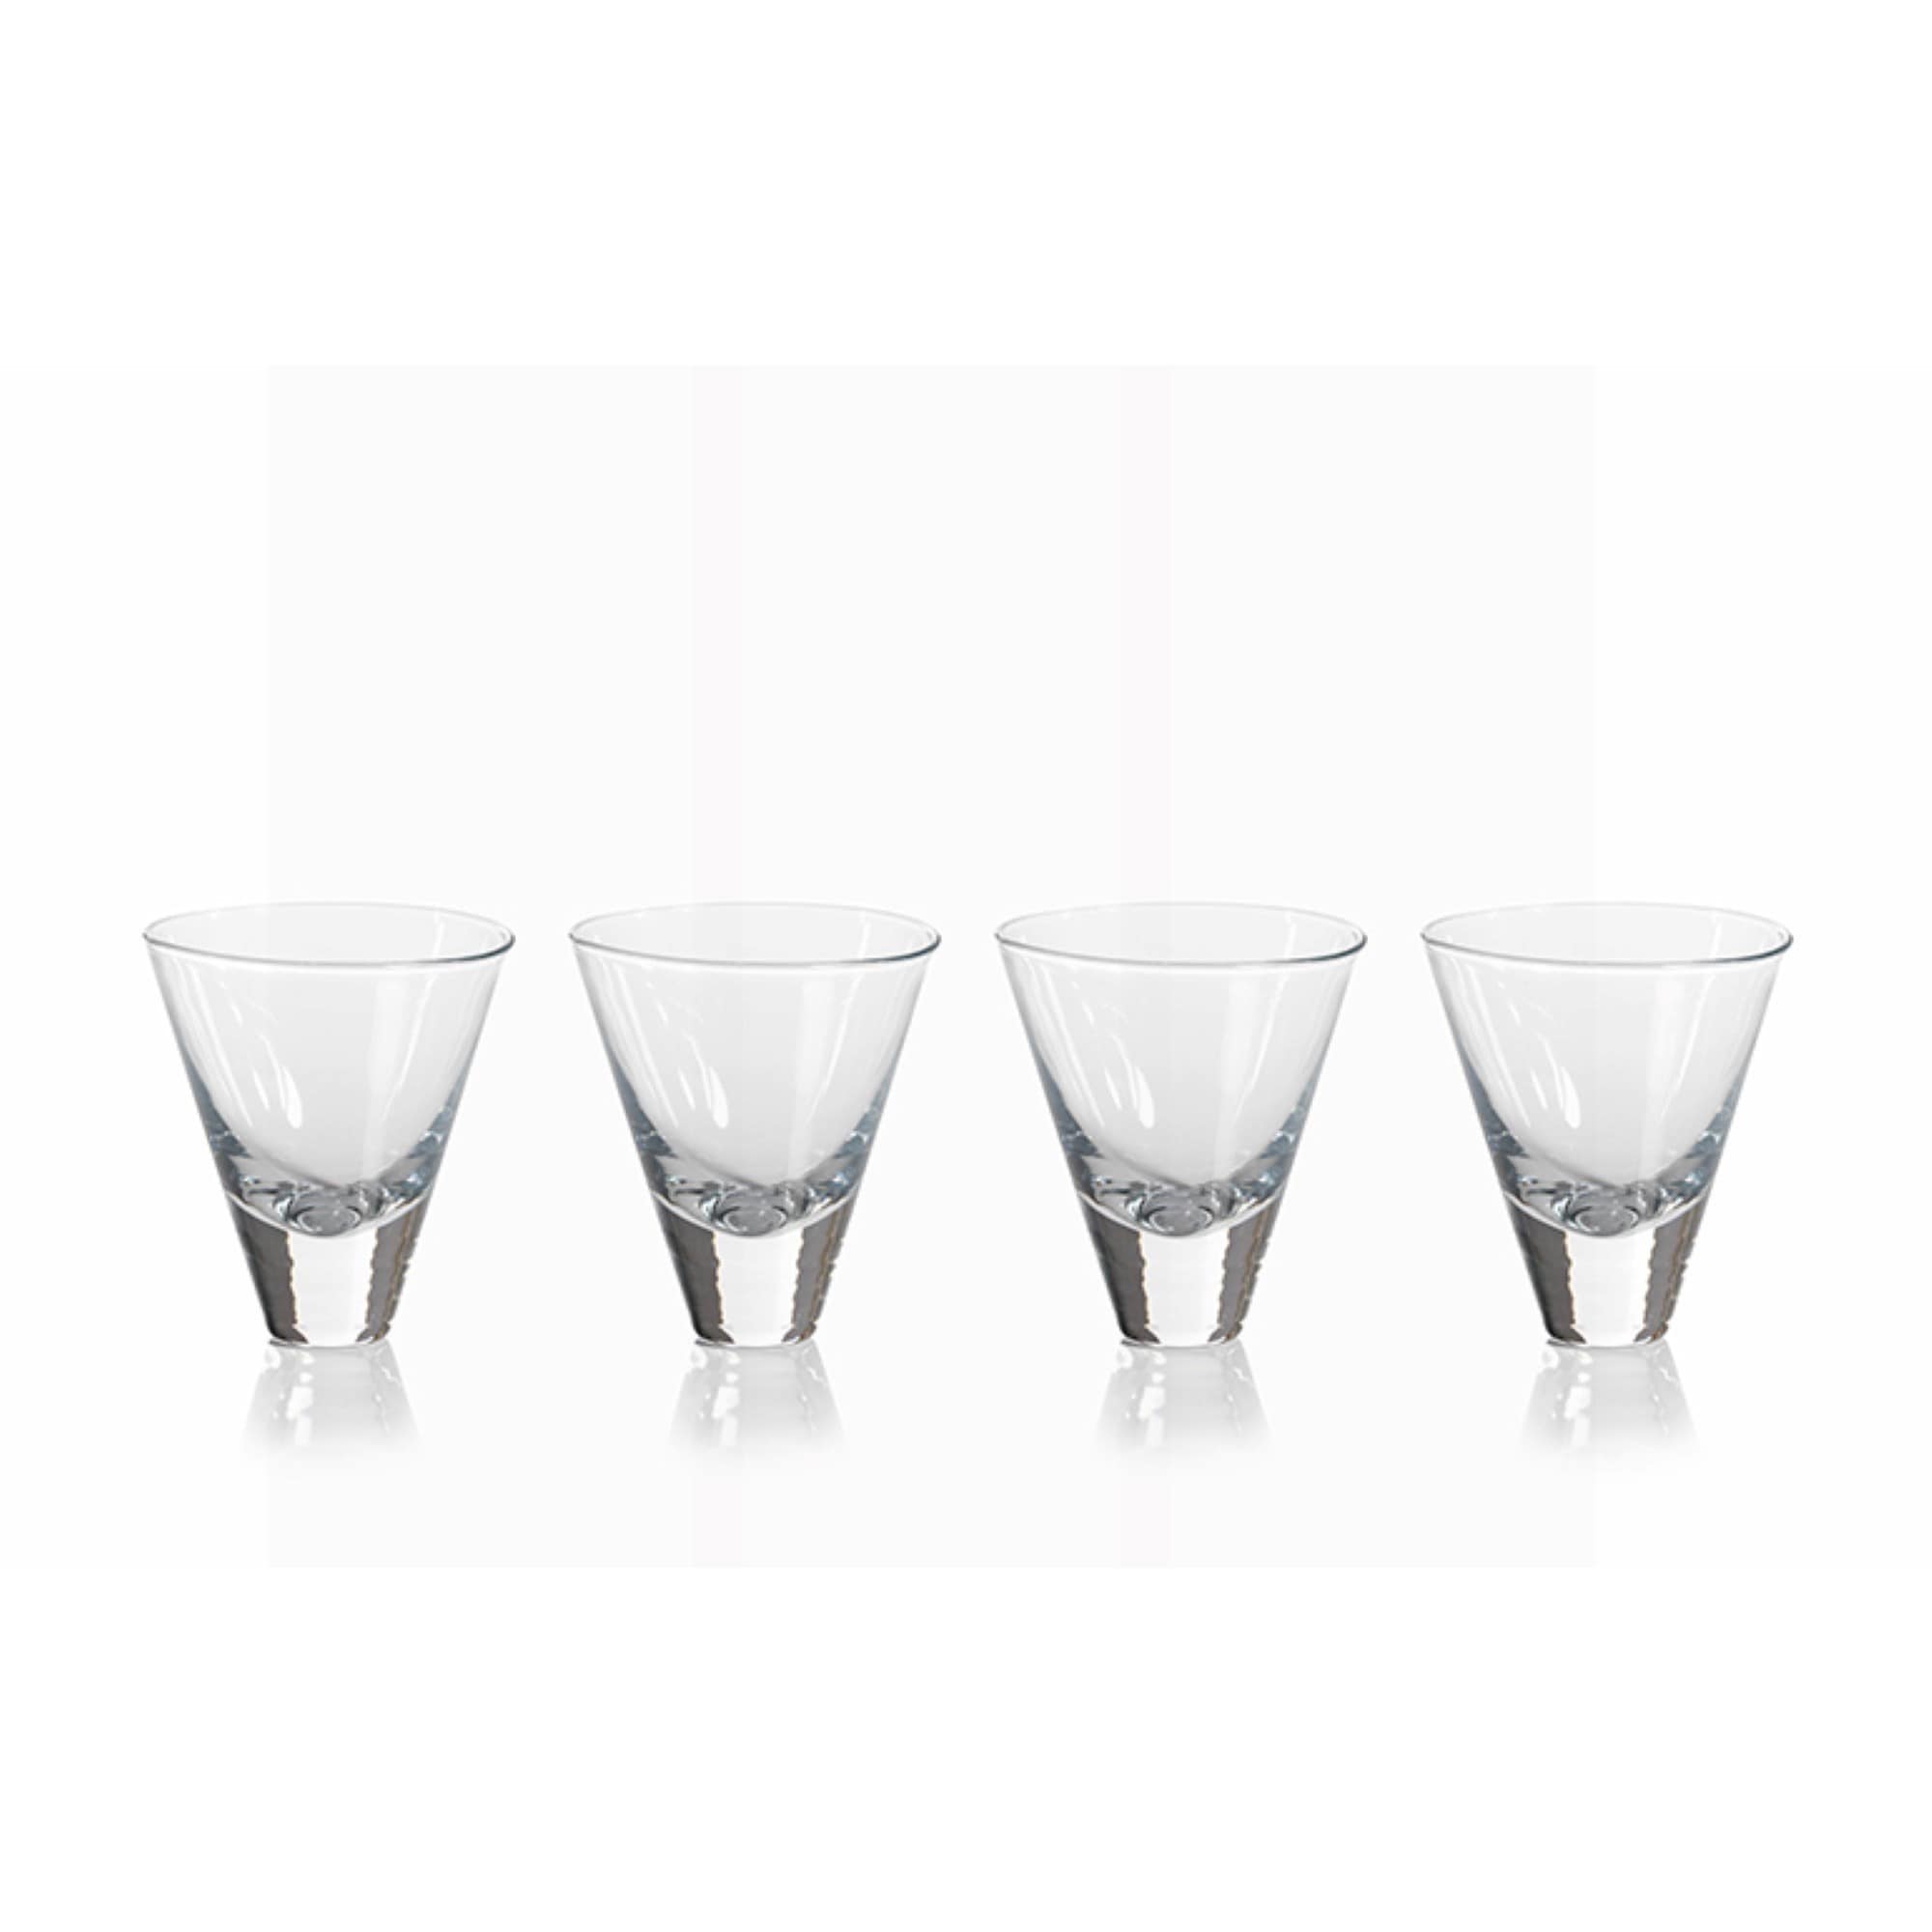 https://ak1.ostkcdn.com/images/products/16692726/Anatole-4.75-Tall-Cocktail-Glass-Set-of-4-44f39a49-18e0-4751-b268-696a4bc781cc.jpg